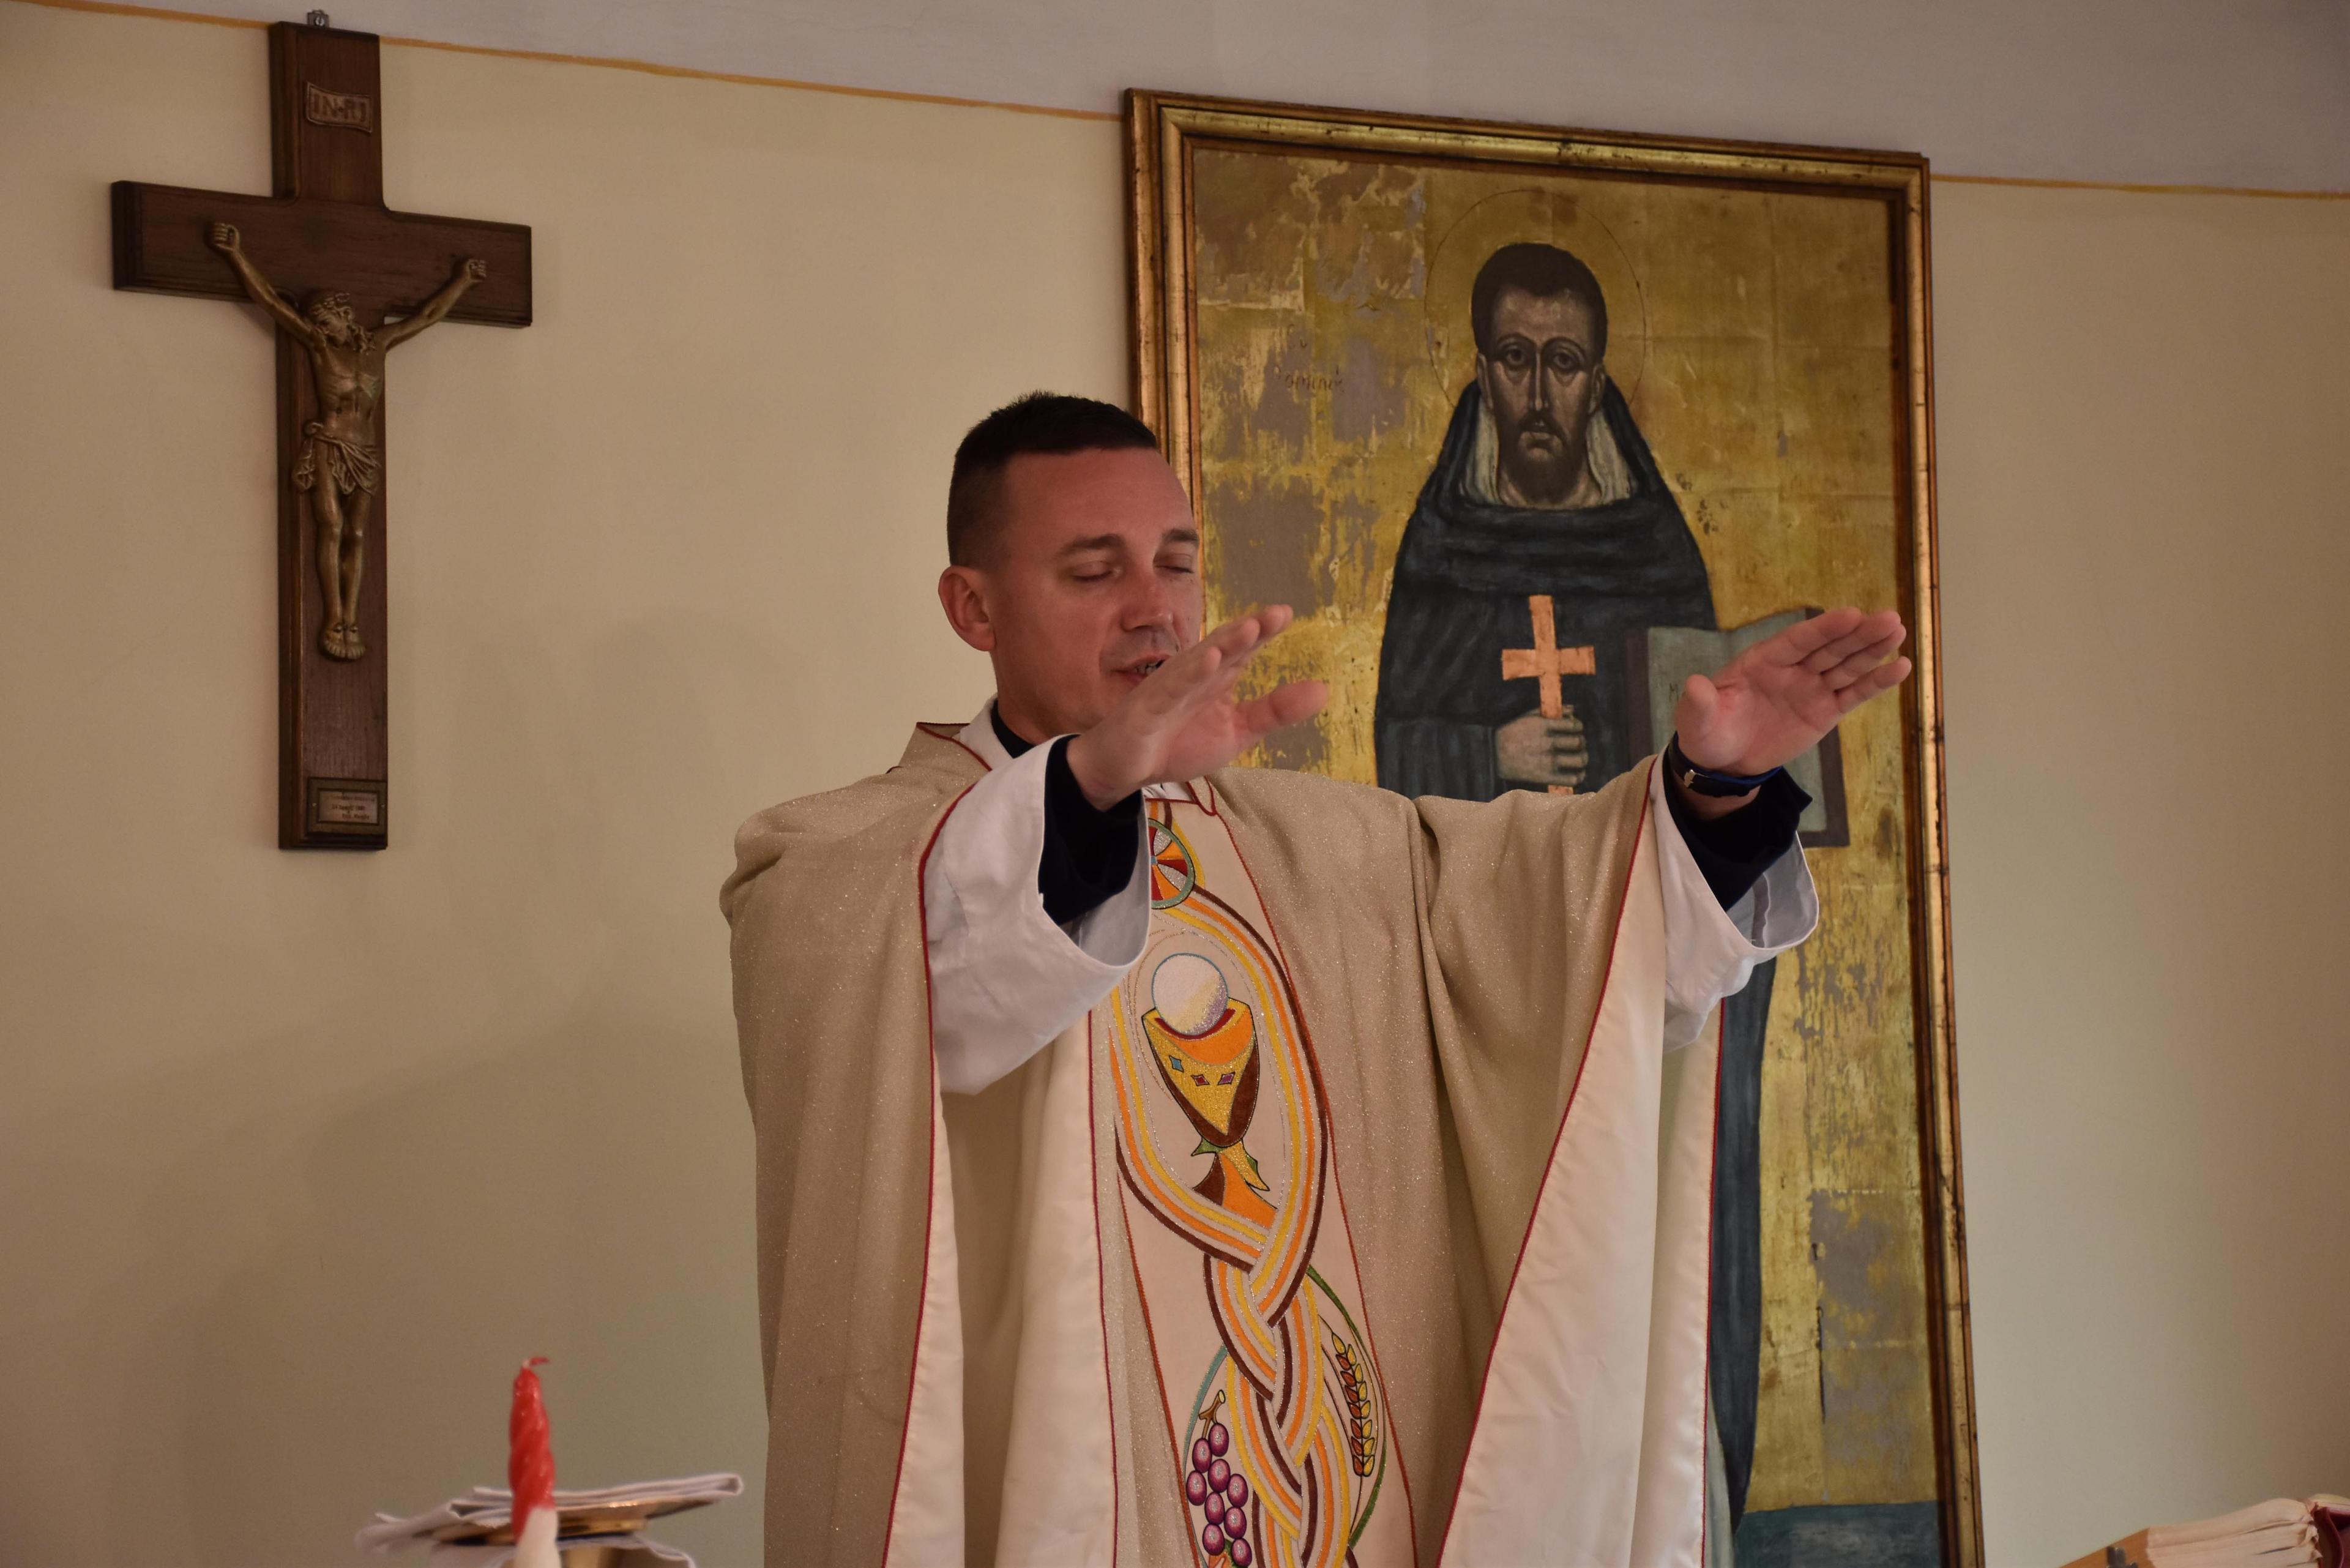 Misa u župnom uredu "Sveti Dominik" u Goraždu - Avaz